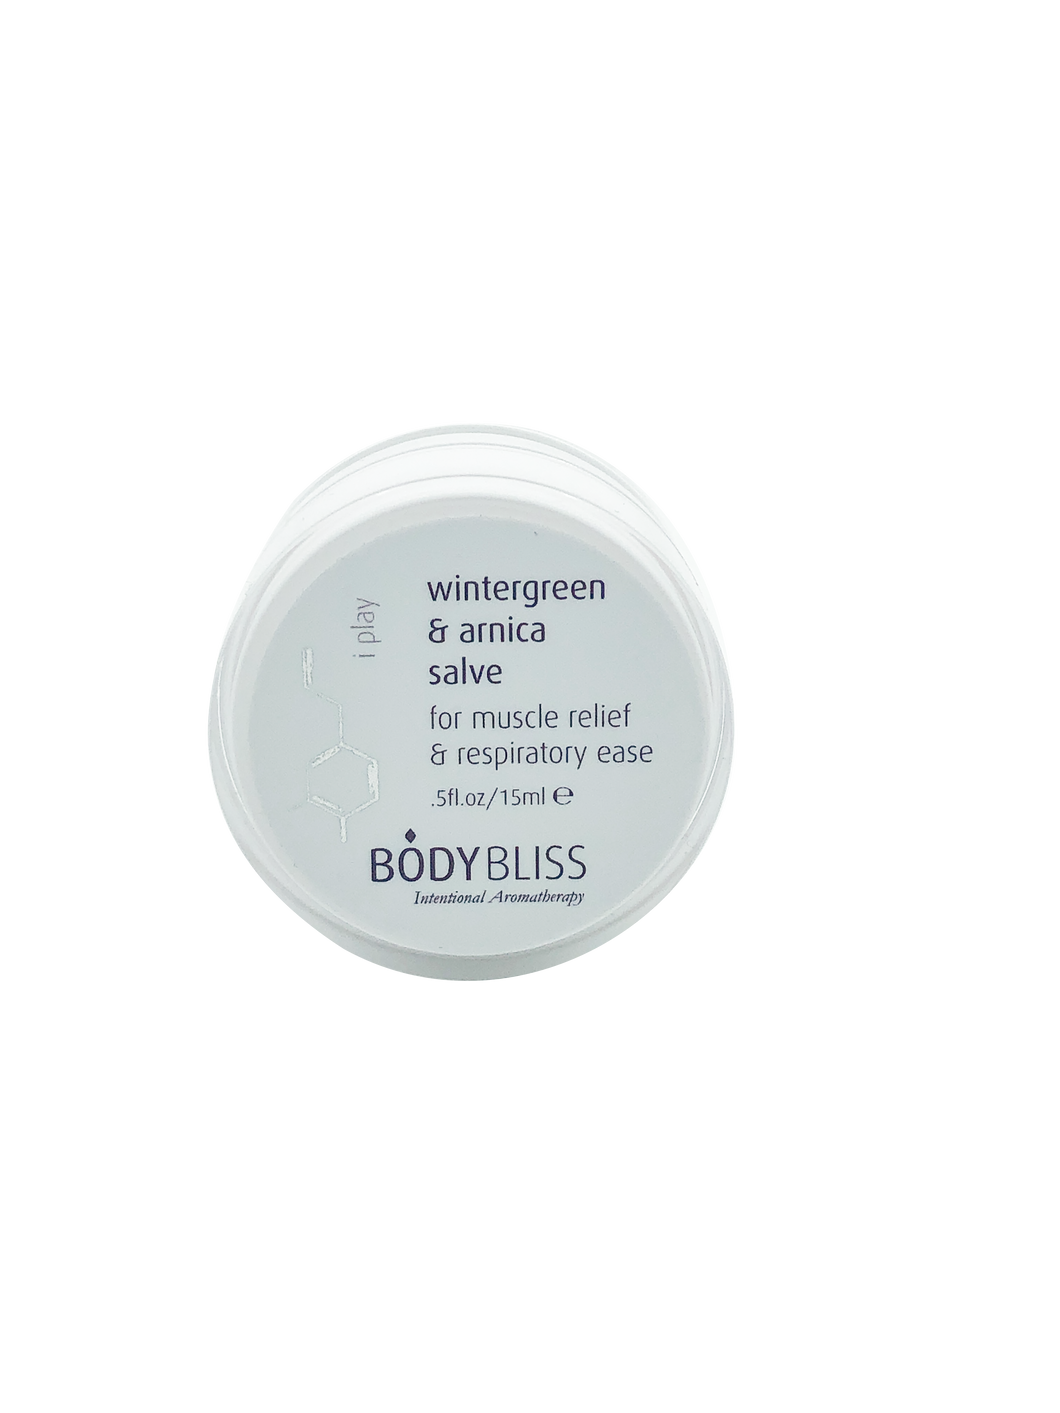 Body Bliss Wintergreen & Arnica Salve